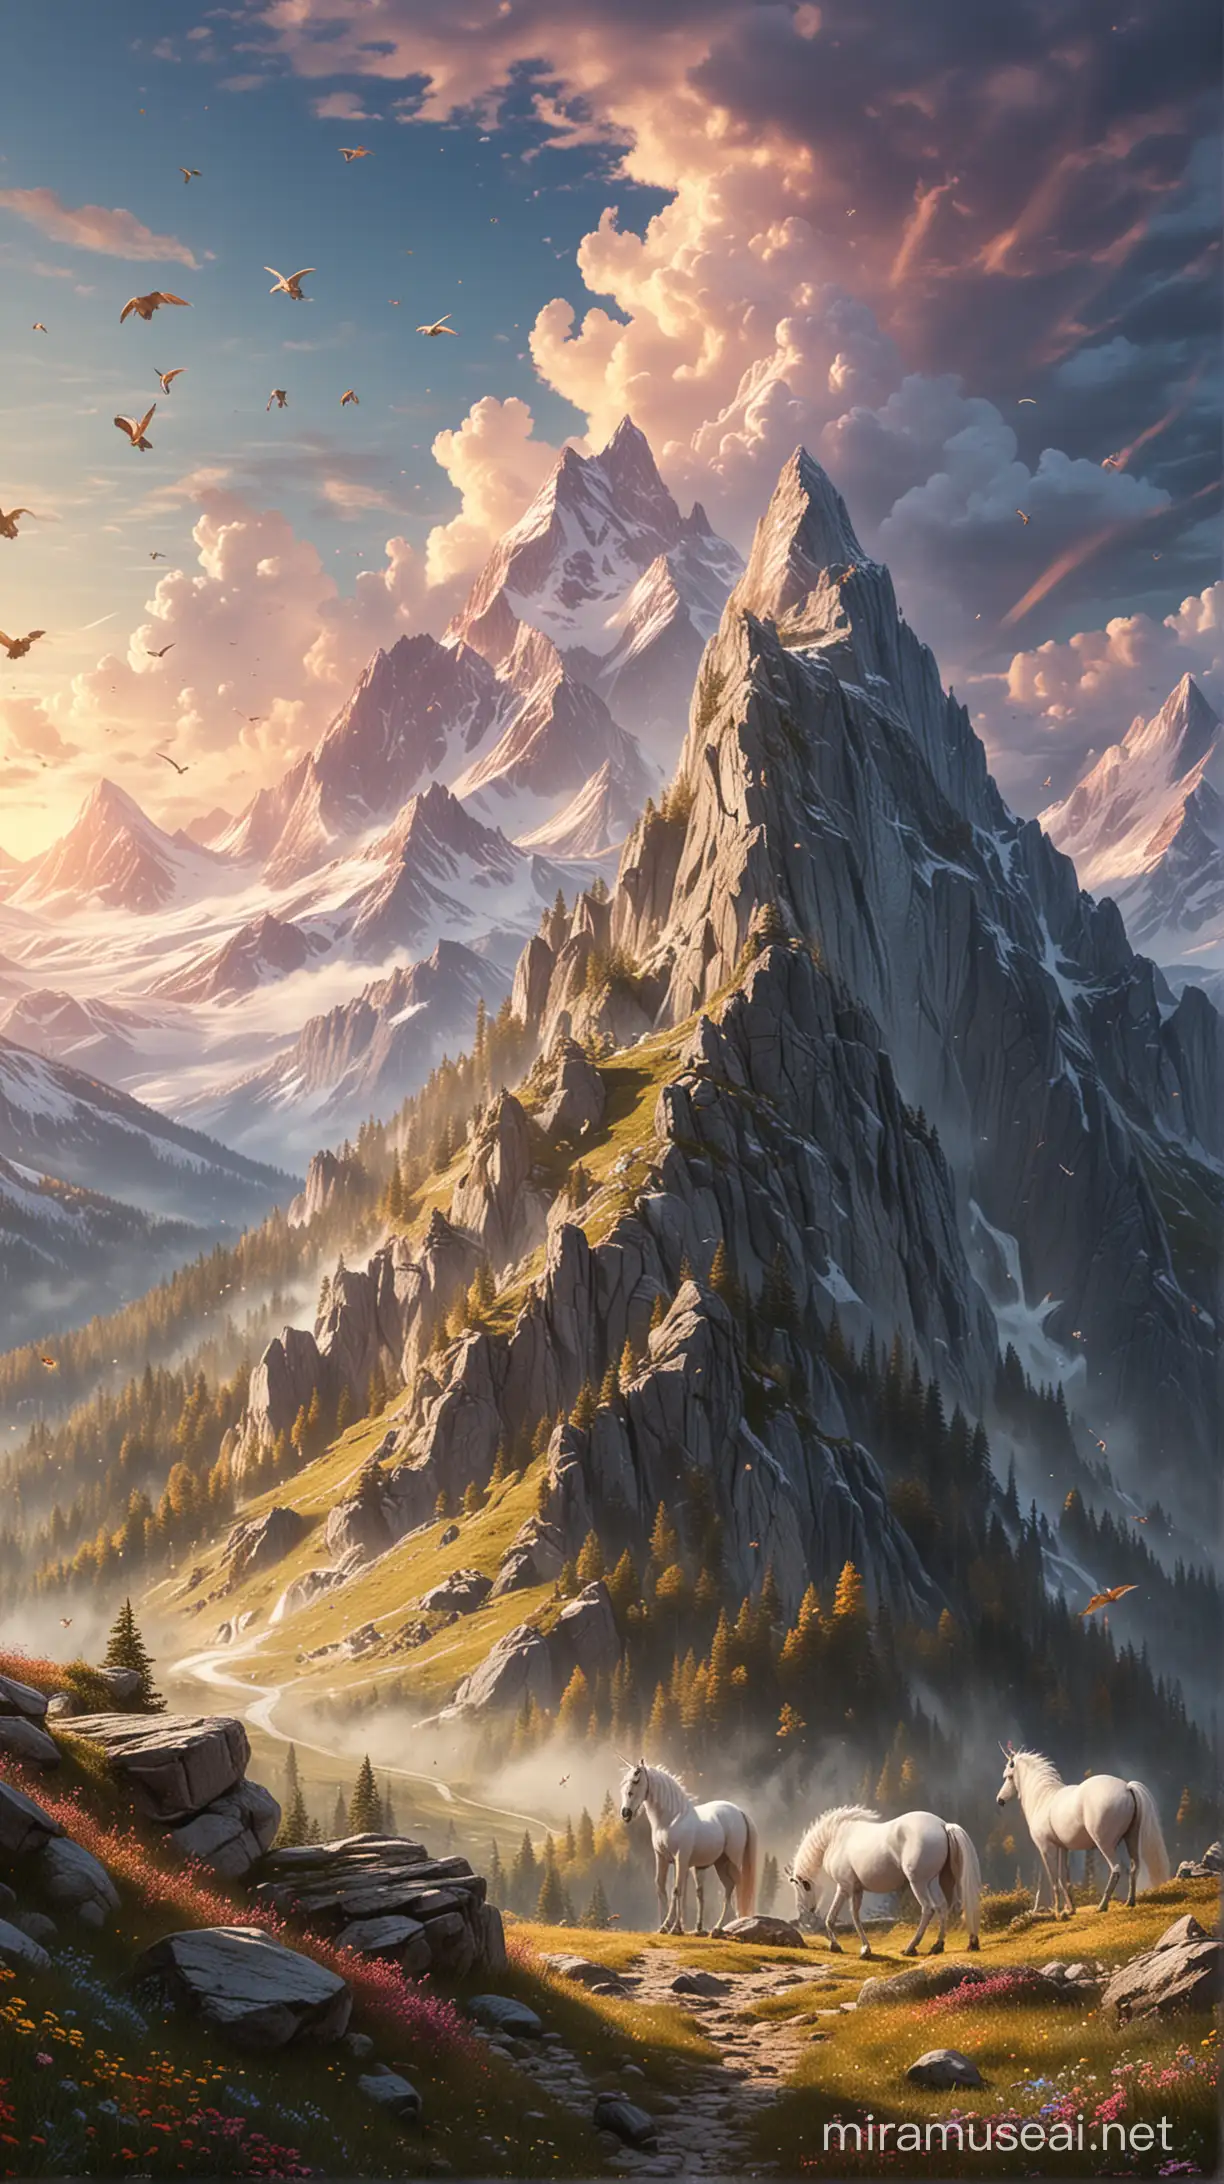 Majestic Mountain with Flying Unicorns and Hidden Treasures